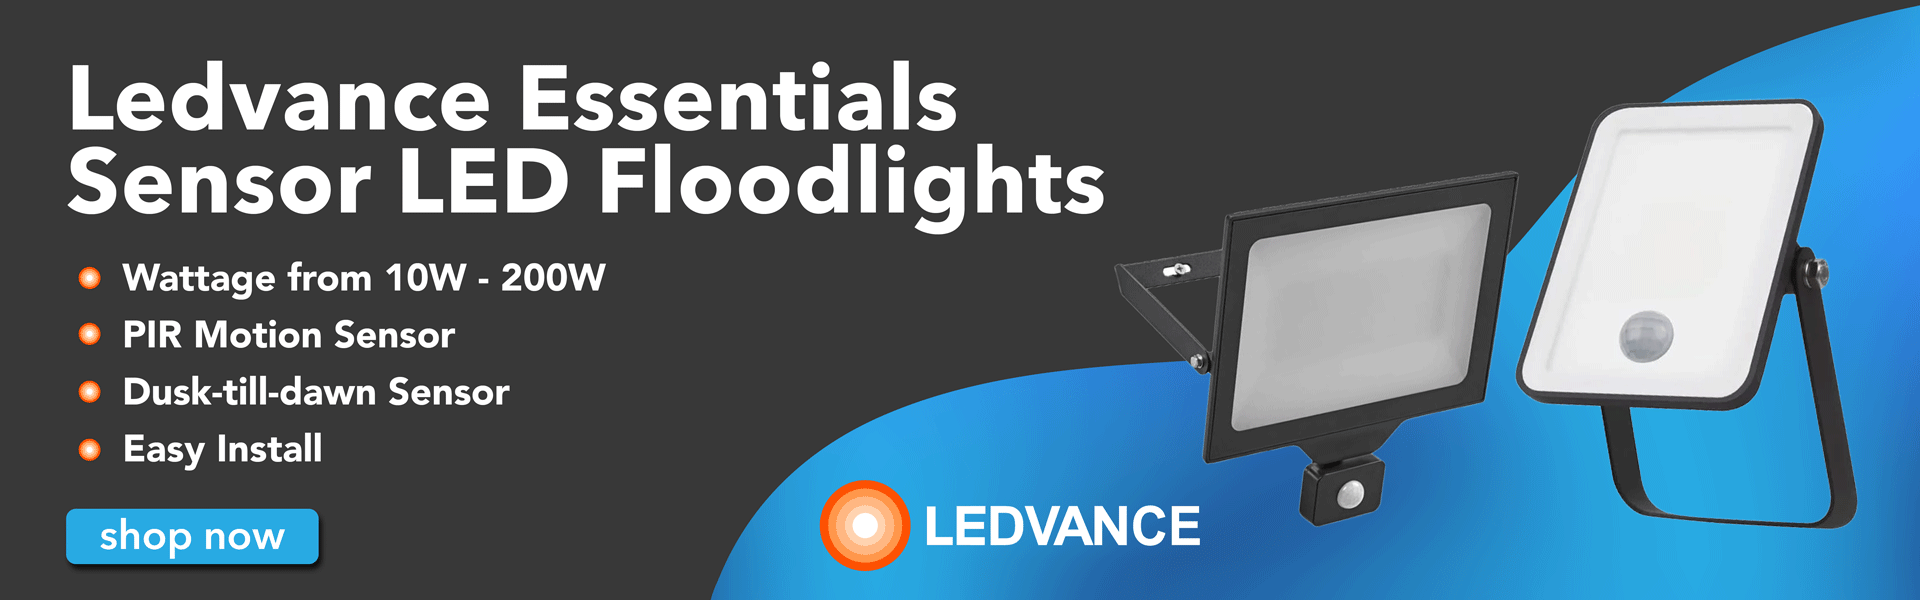 ledvance essentials sensor floodlights